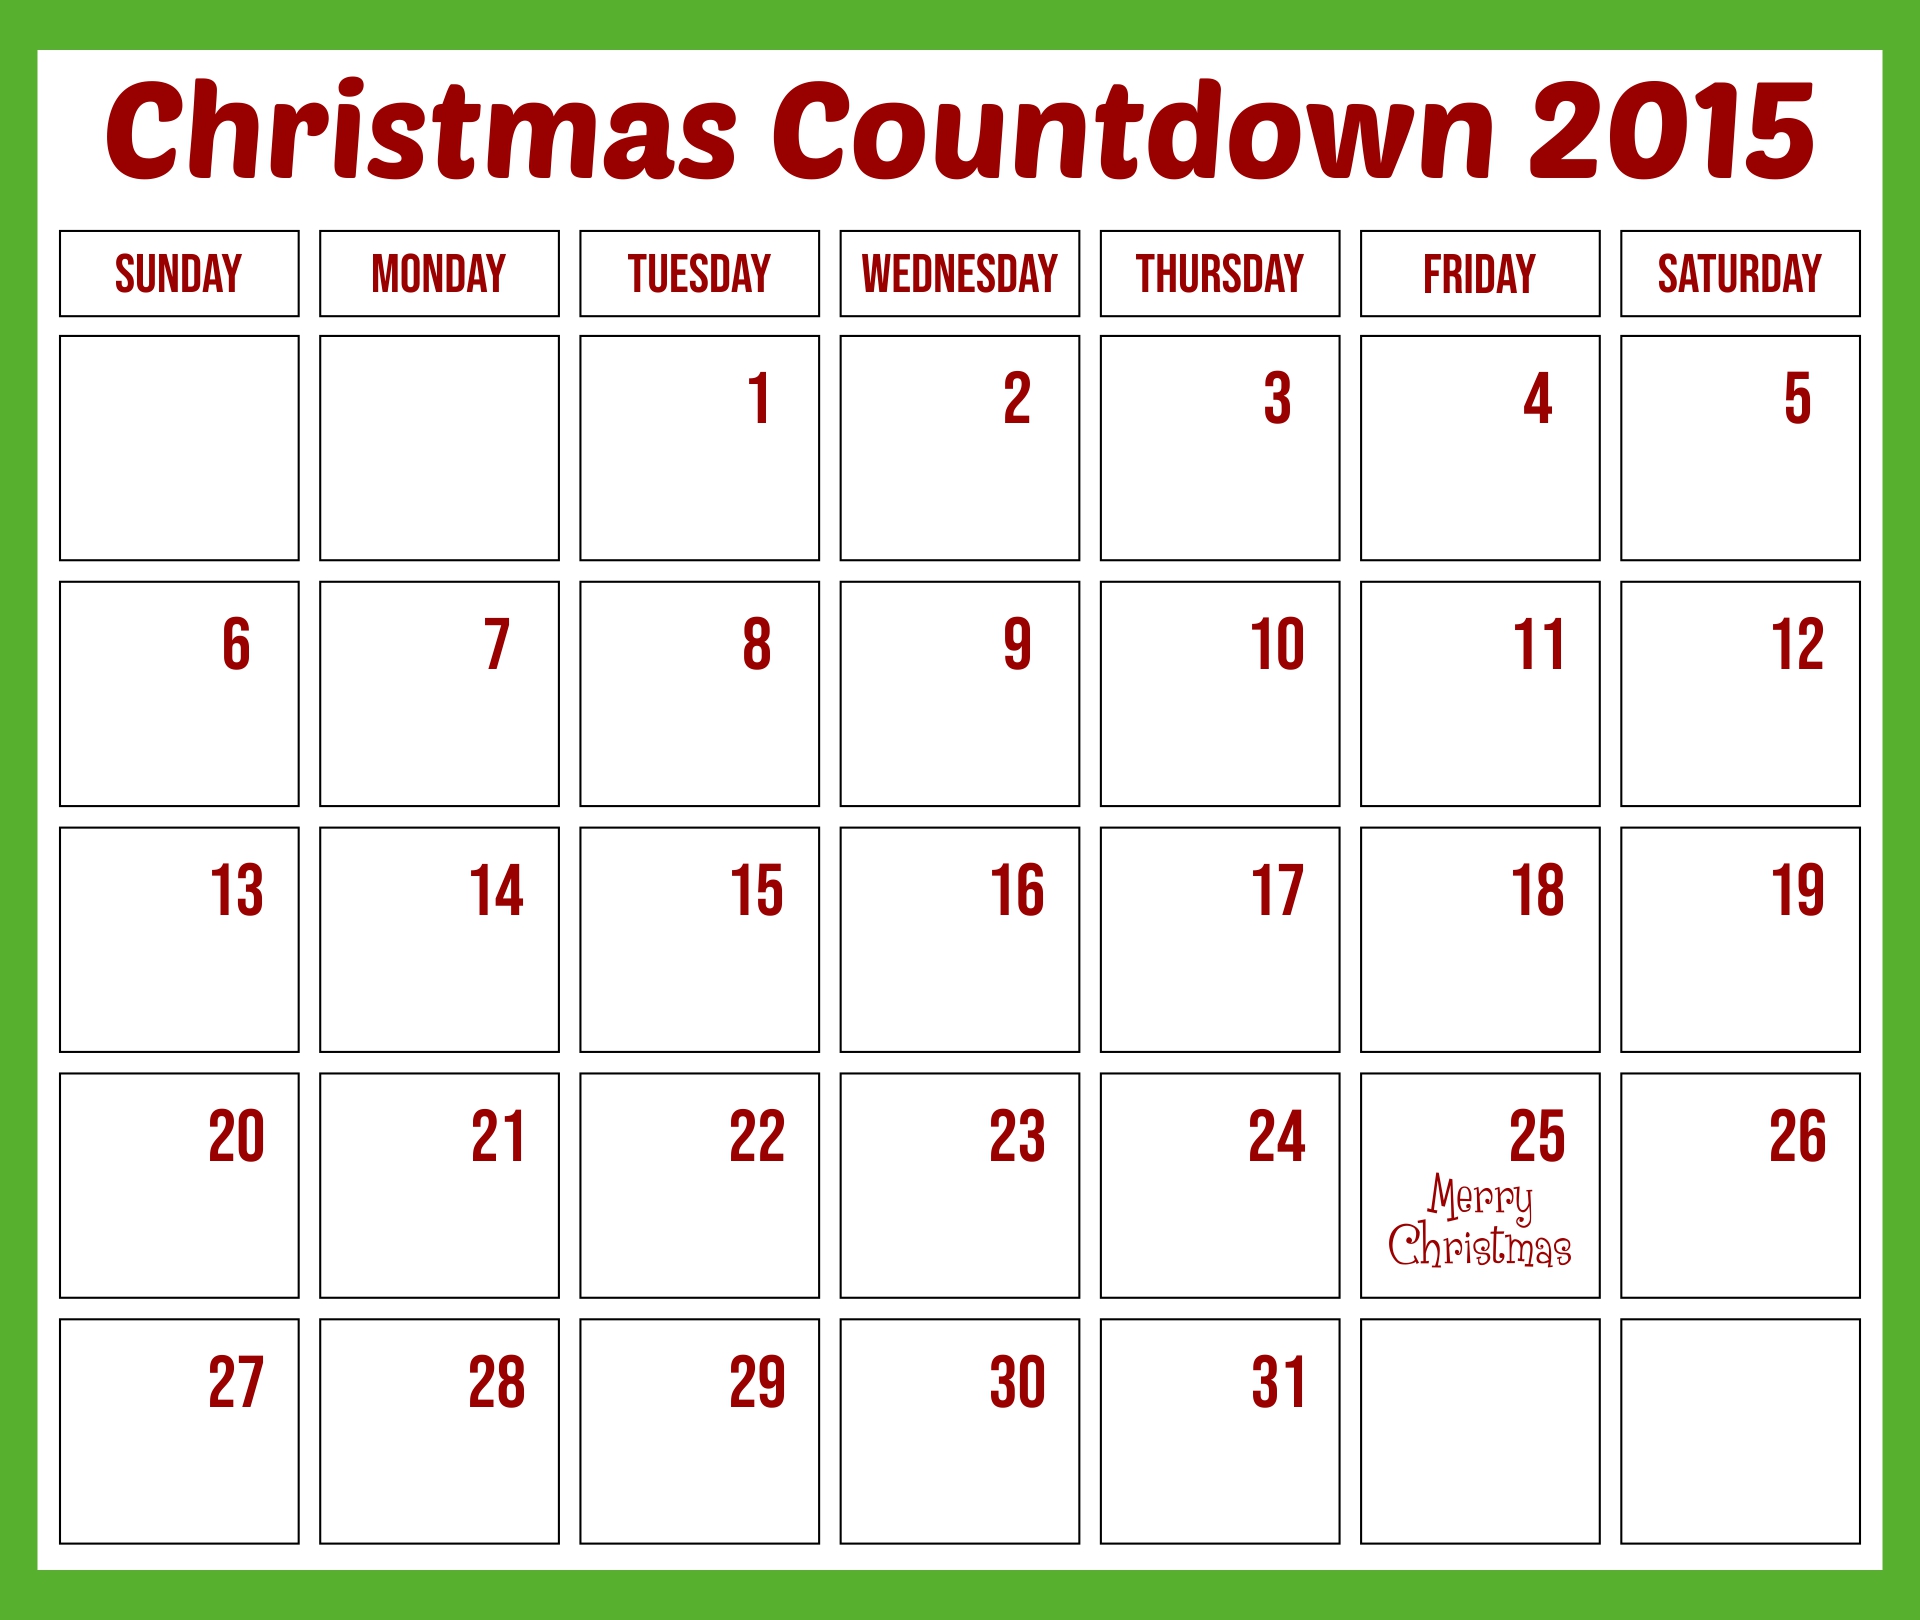 Christmas Countdown Calendar 2015